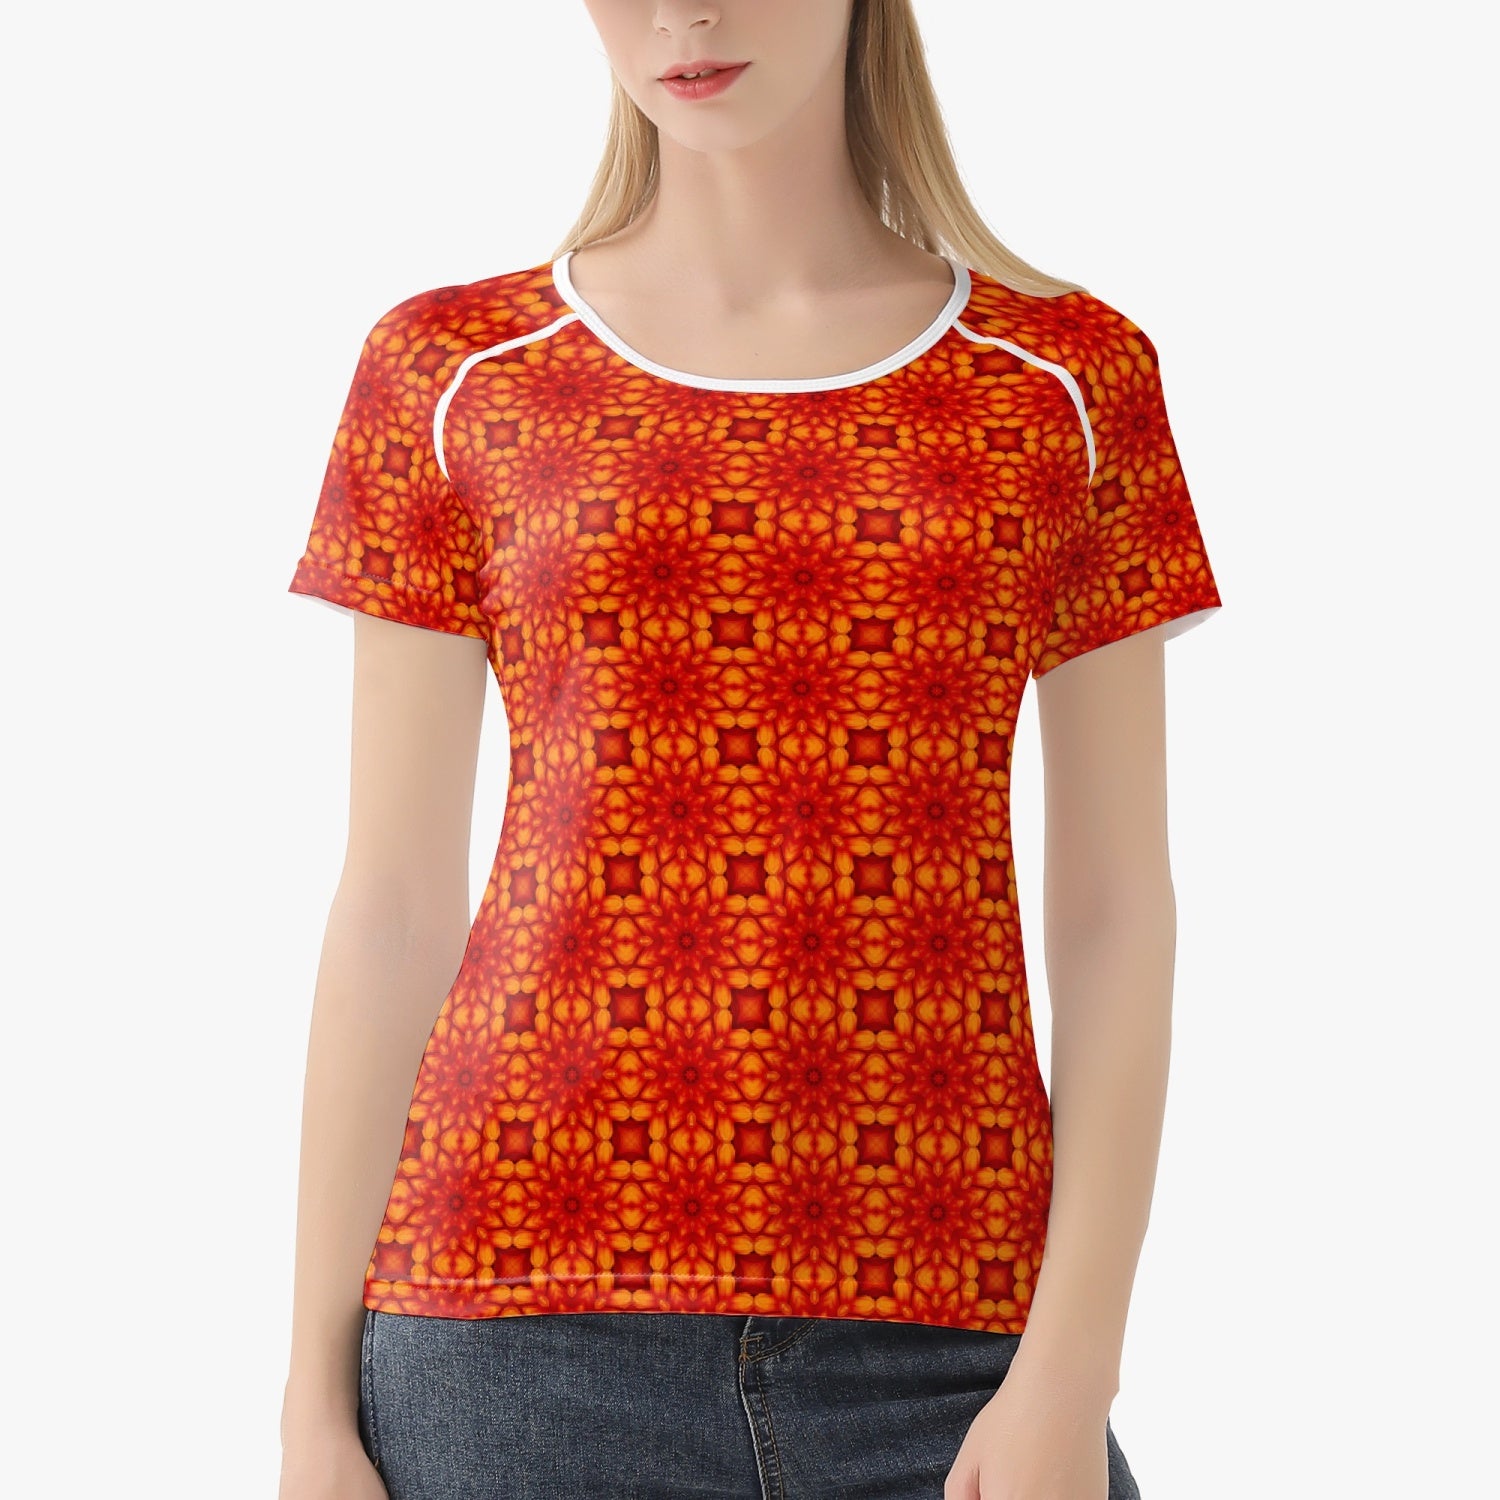 Orange Sacral Chacra Handmade Yoga Top for Women sports T-shirt, By Sensus Studio Design